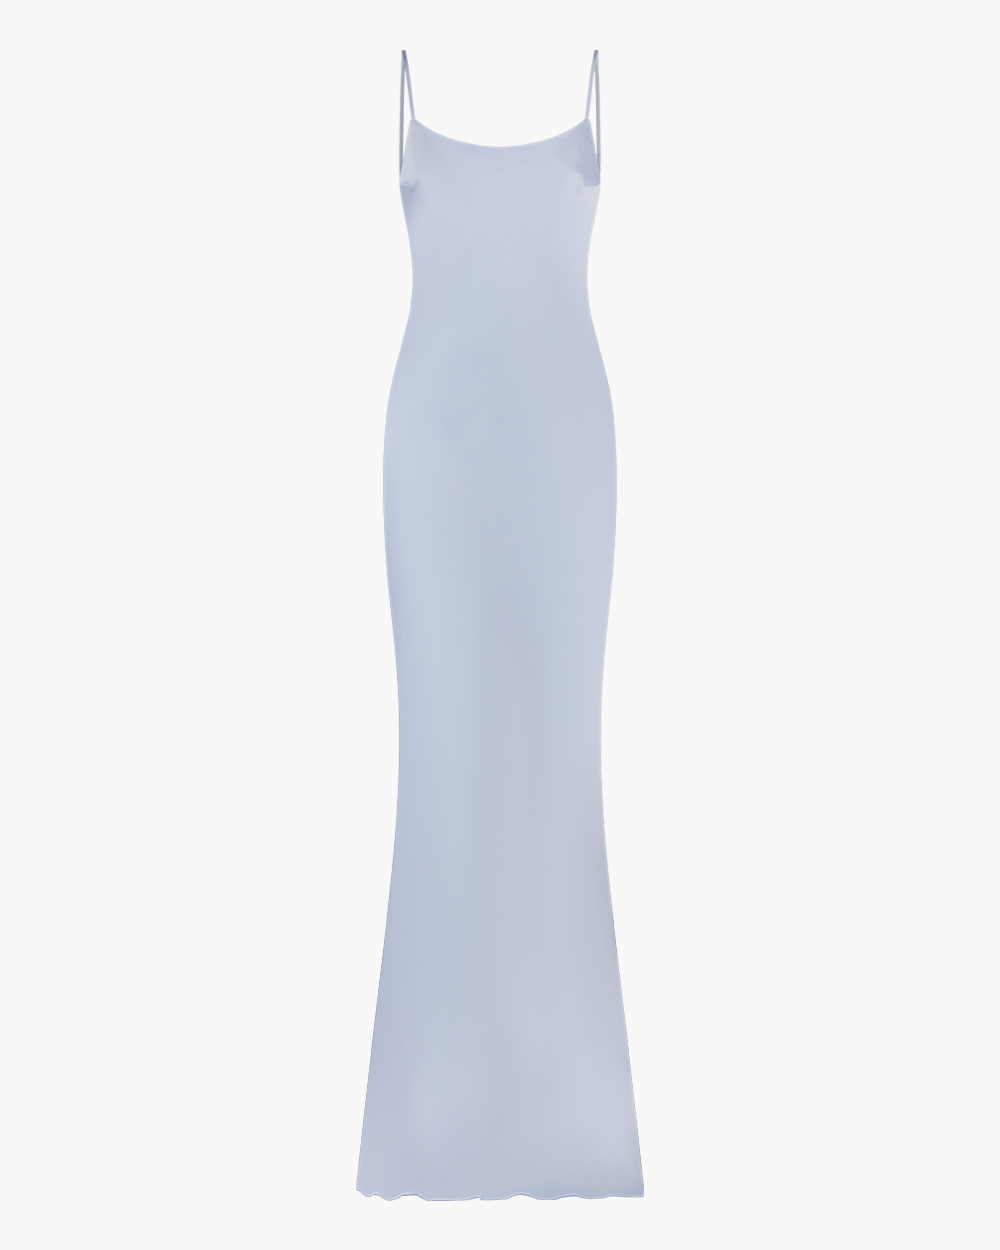 NINFEA MAXI LIGHT BLUE DRESS